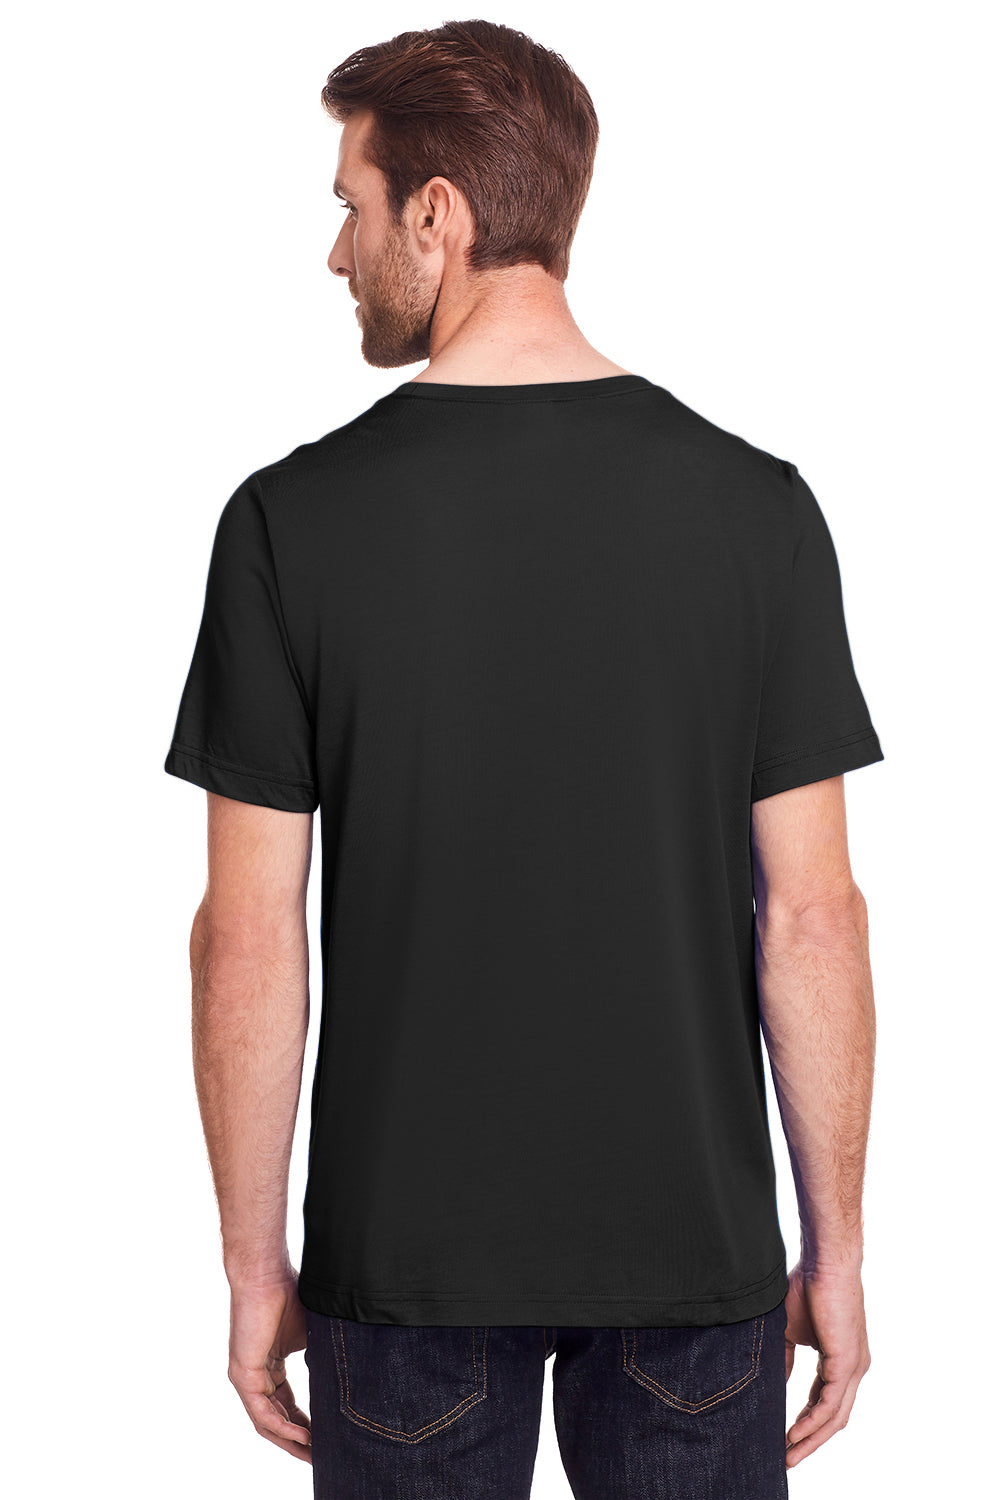 Core 365 CE111 Mens Fusion ChromaSoft Performance Moisture Wicking Short Sleeve Crewneck T-Shirt Black Back